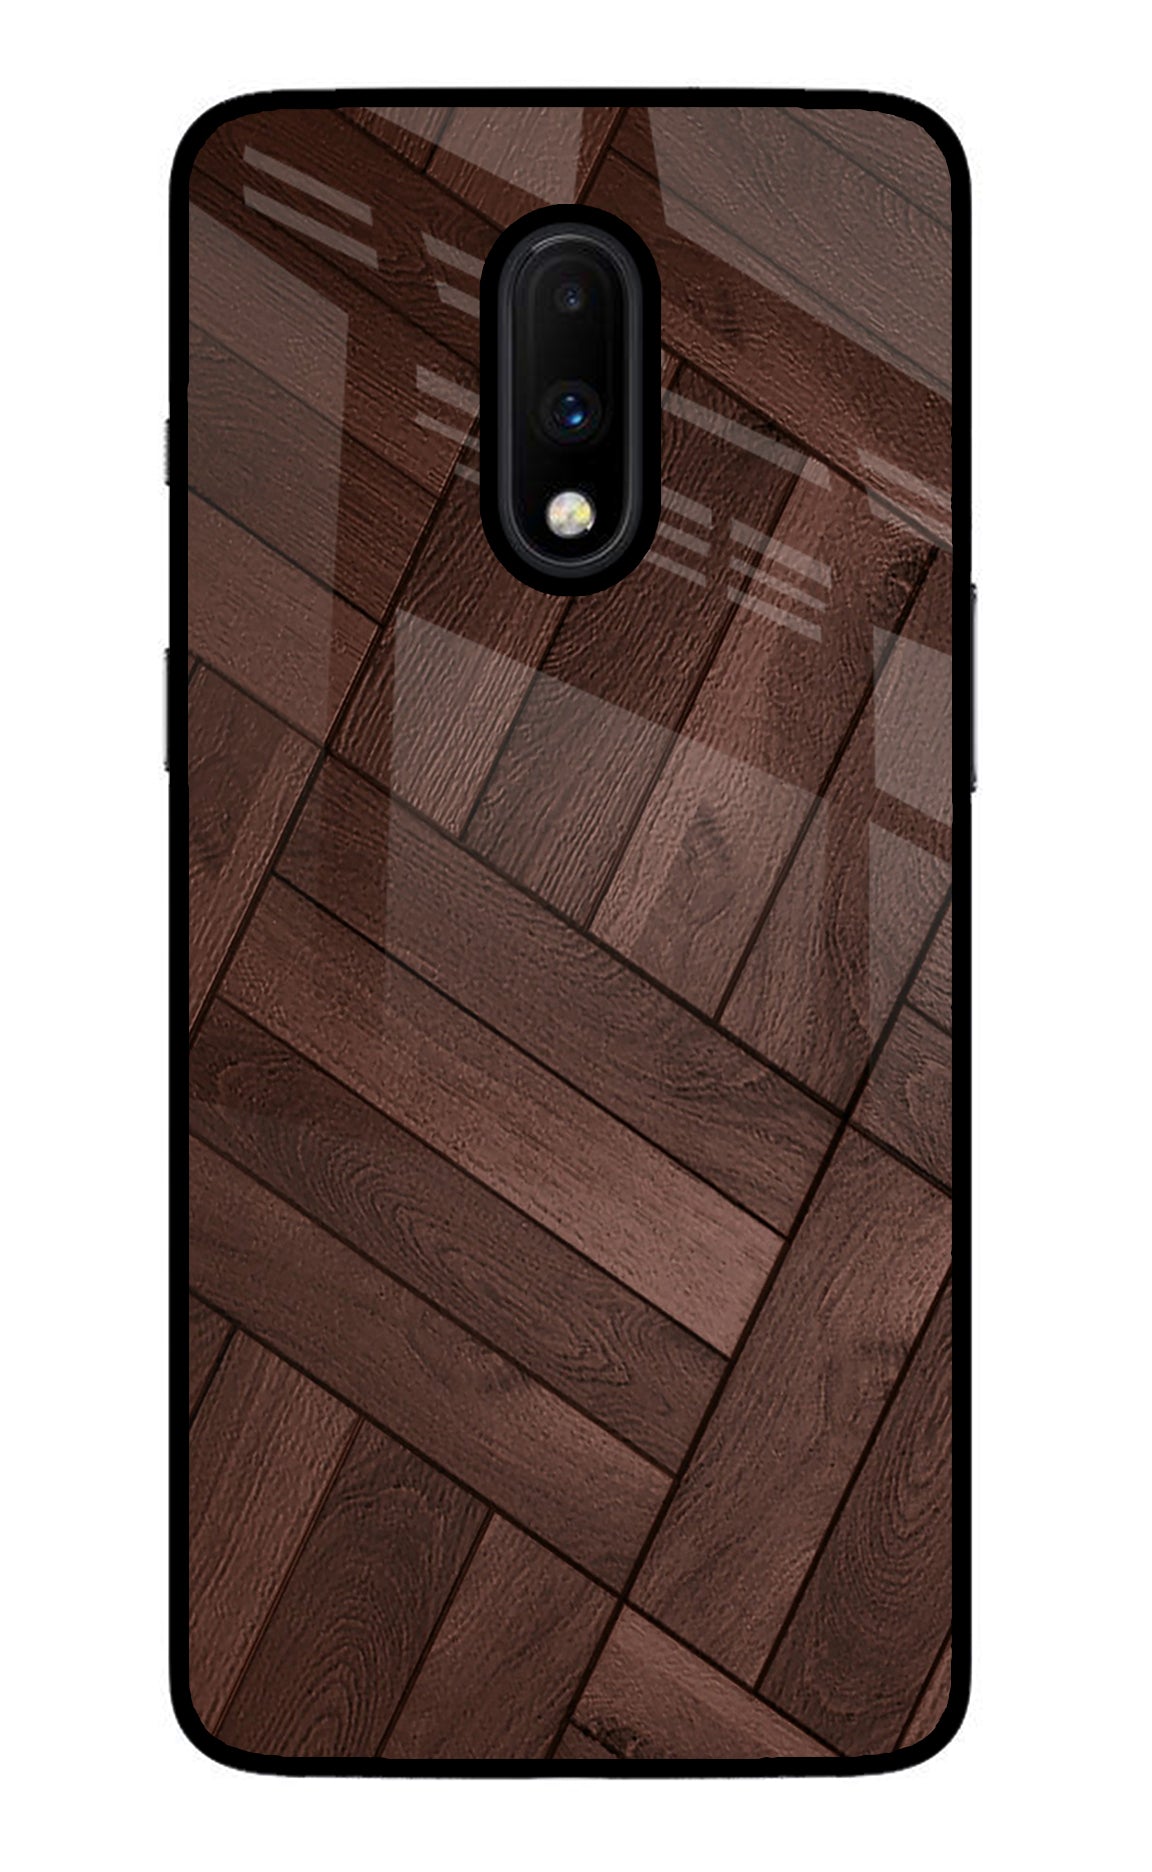 Wooden Texture Design Oneplus 7 Glass Case